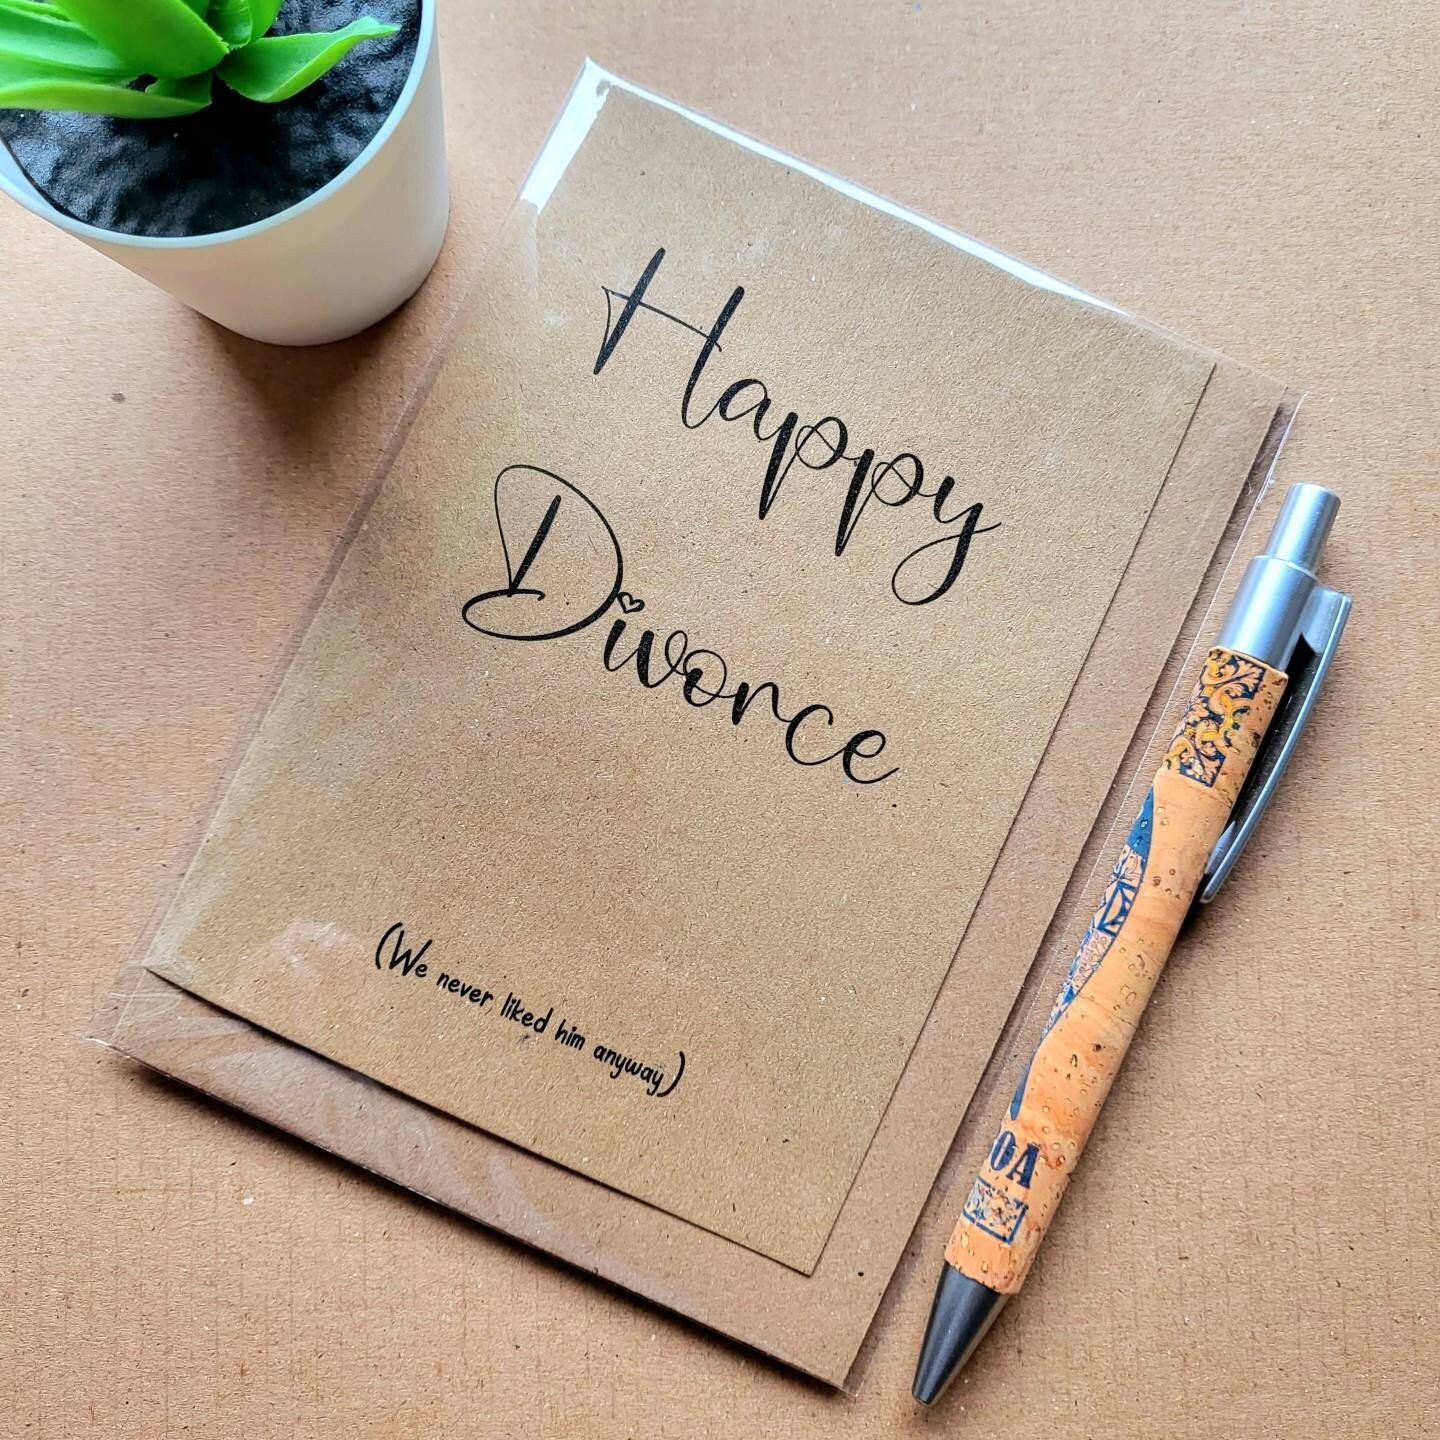 Funny divorced card for her - Happy Divorce!